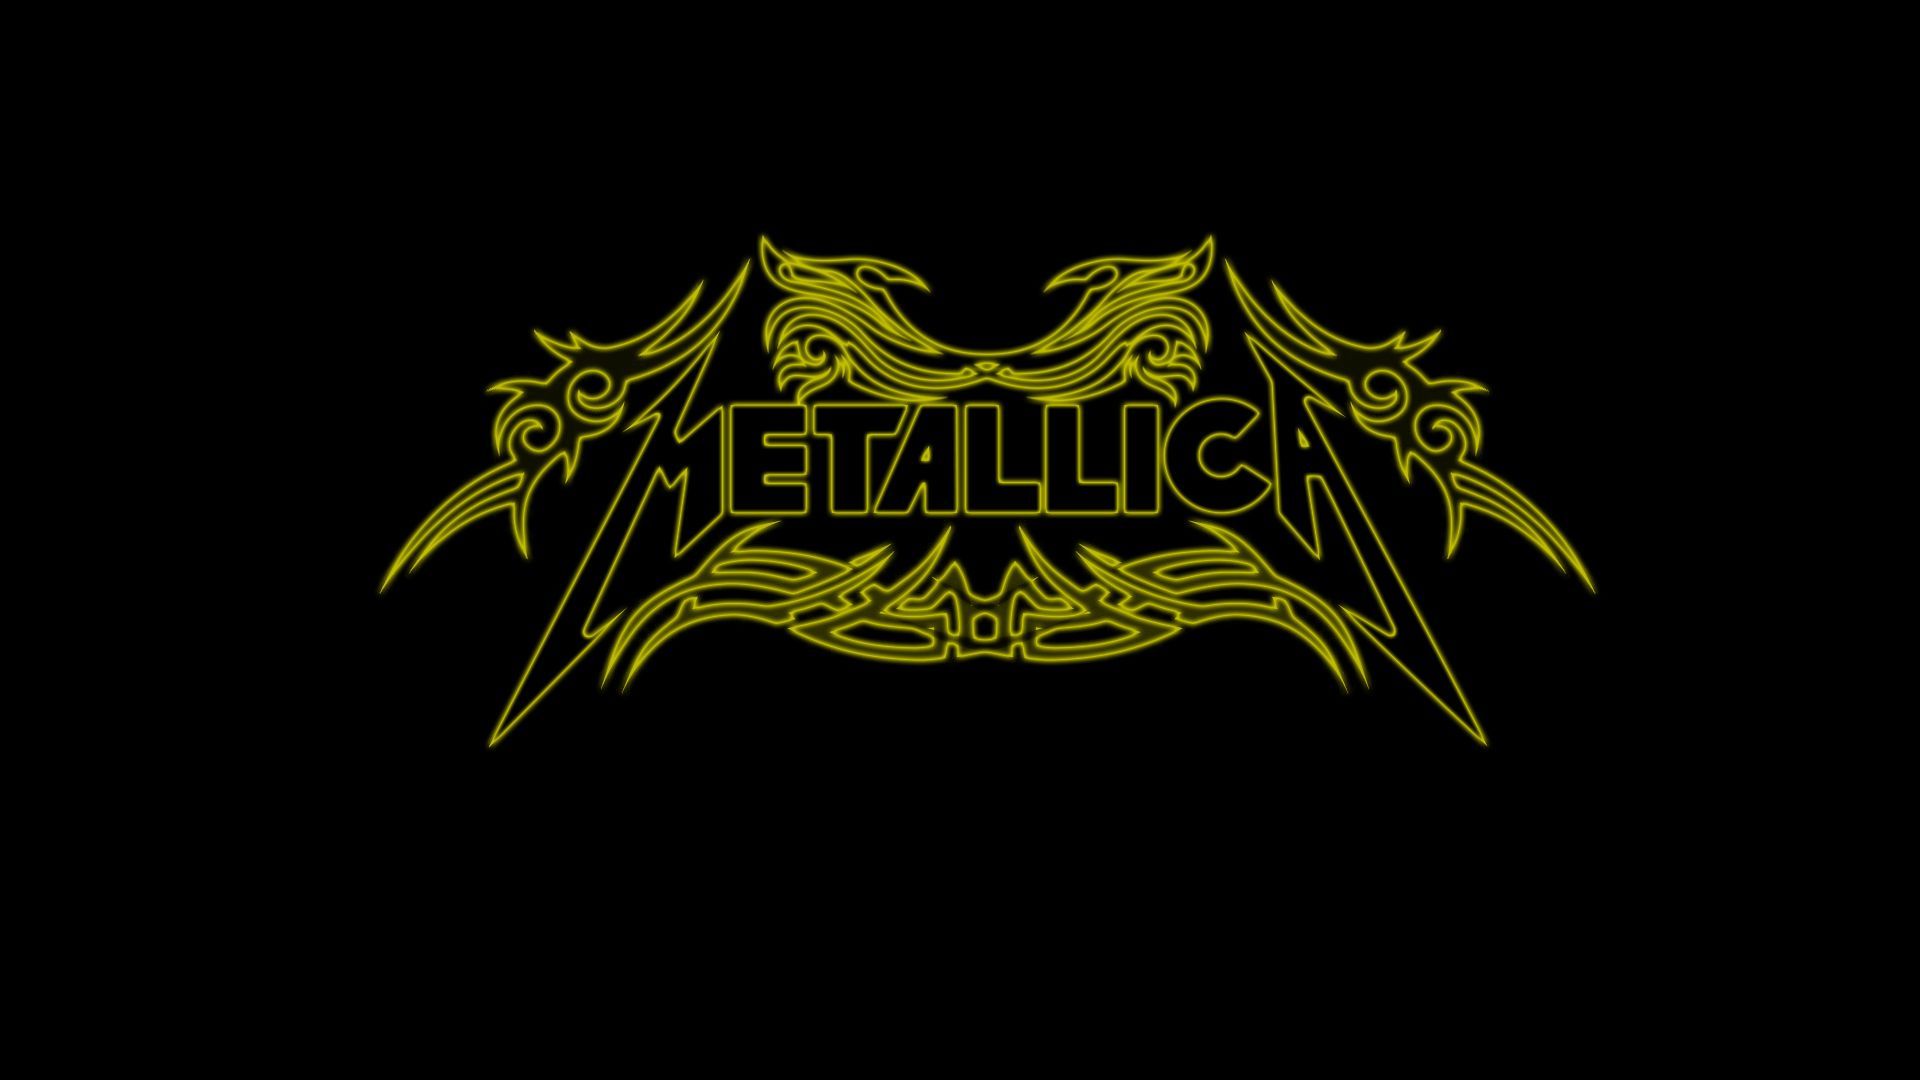 Metallica Wallpaper by NIHILUSDESIGNS on DeviantArt